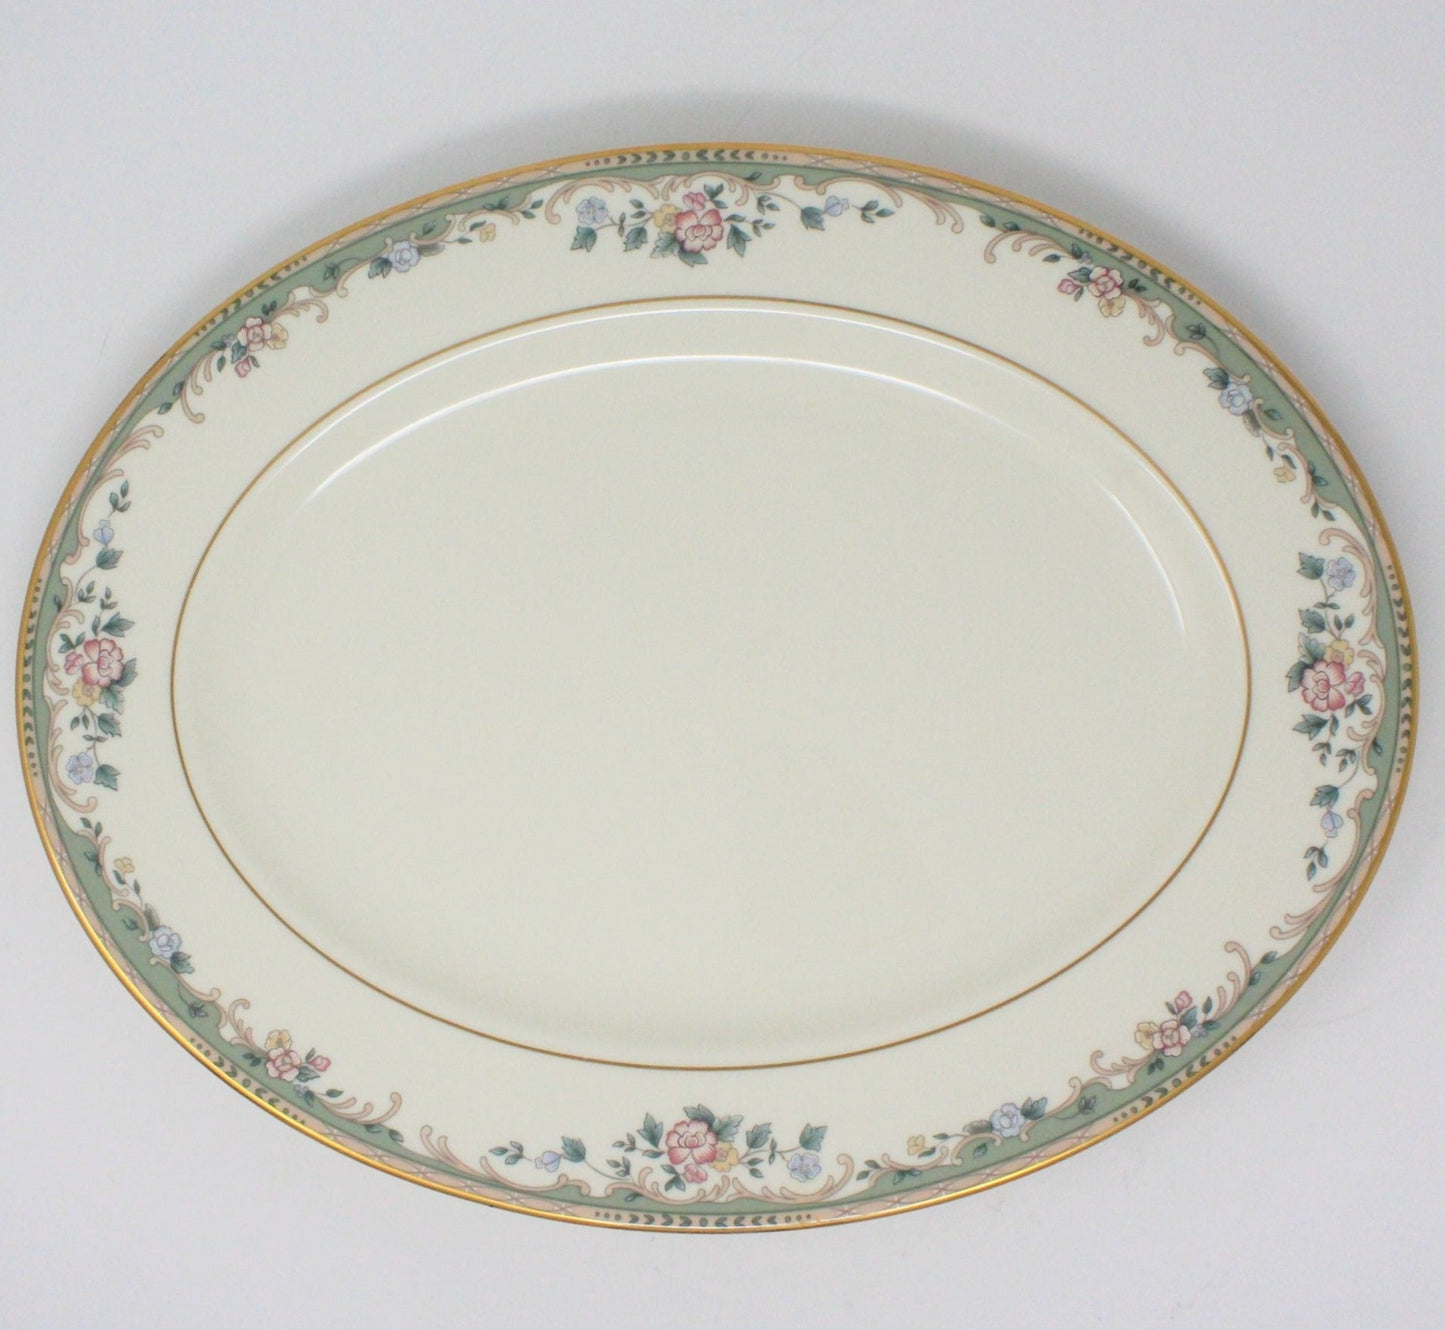 Serving Platter, Lenox, Spring Vista, American Home Collection, 13"